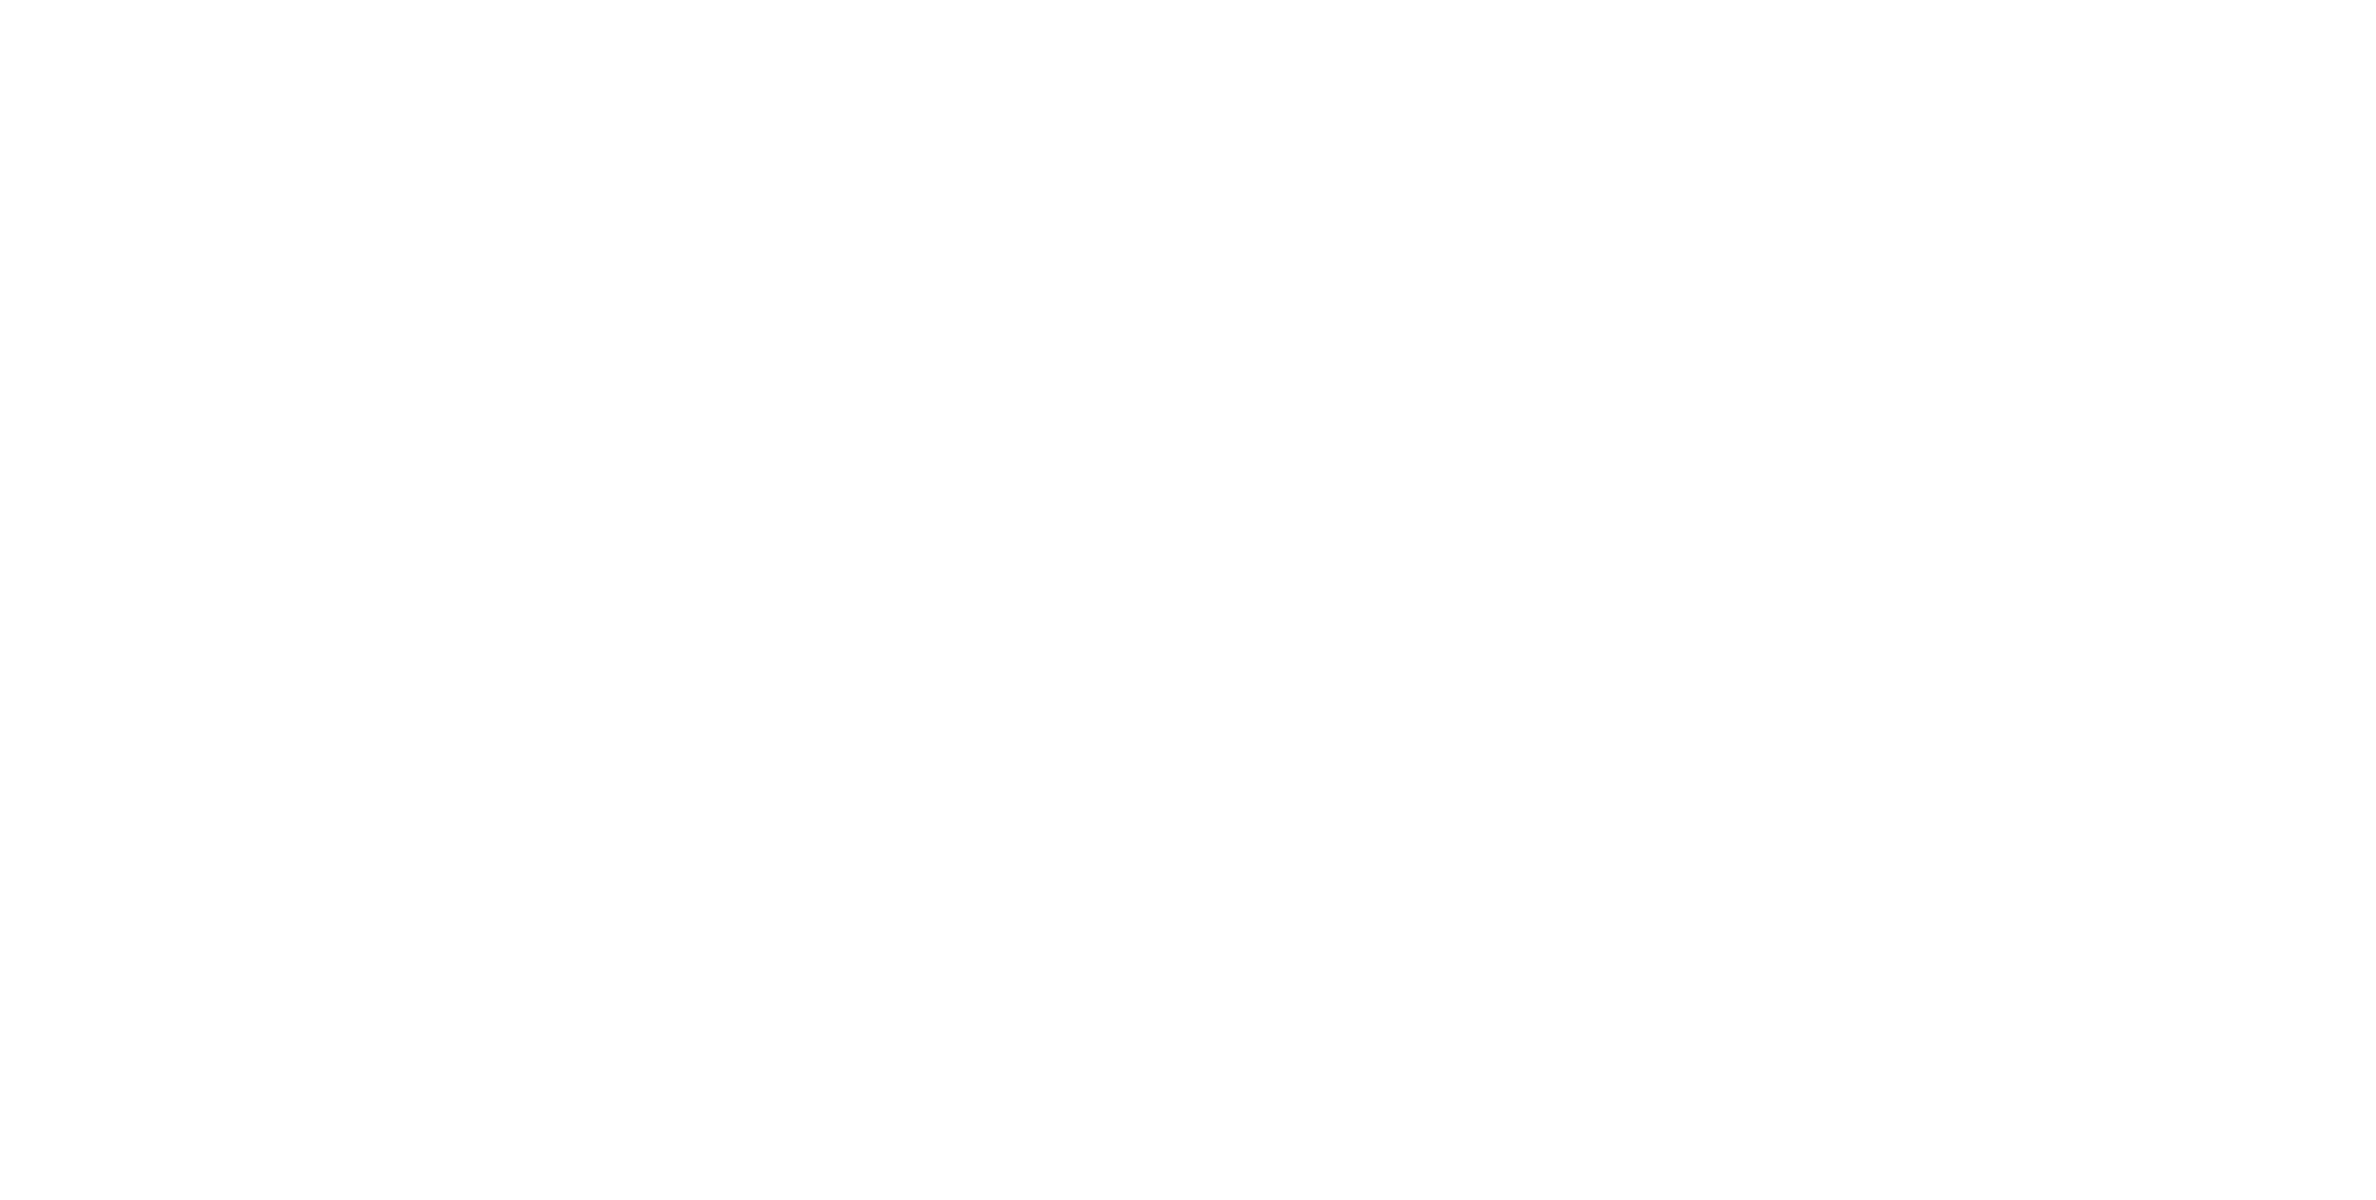 Care Talents logo